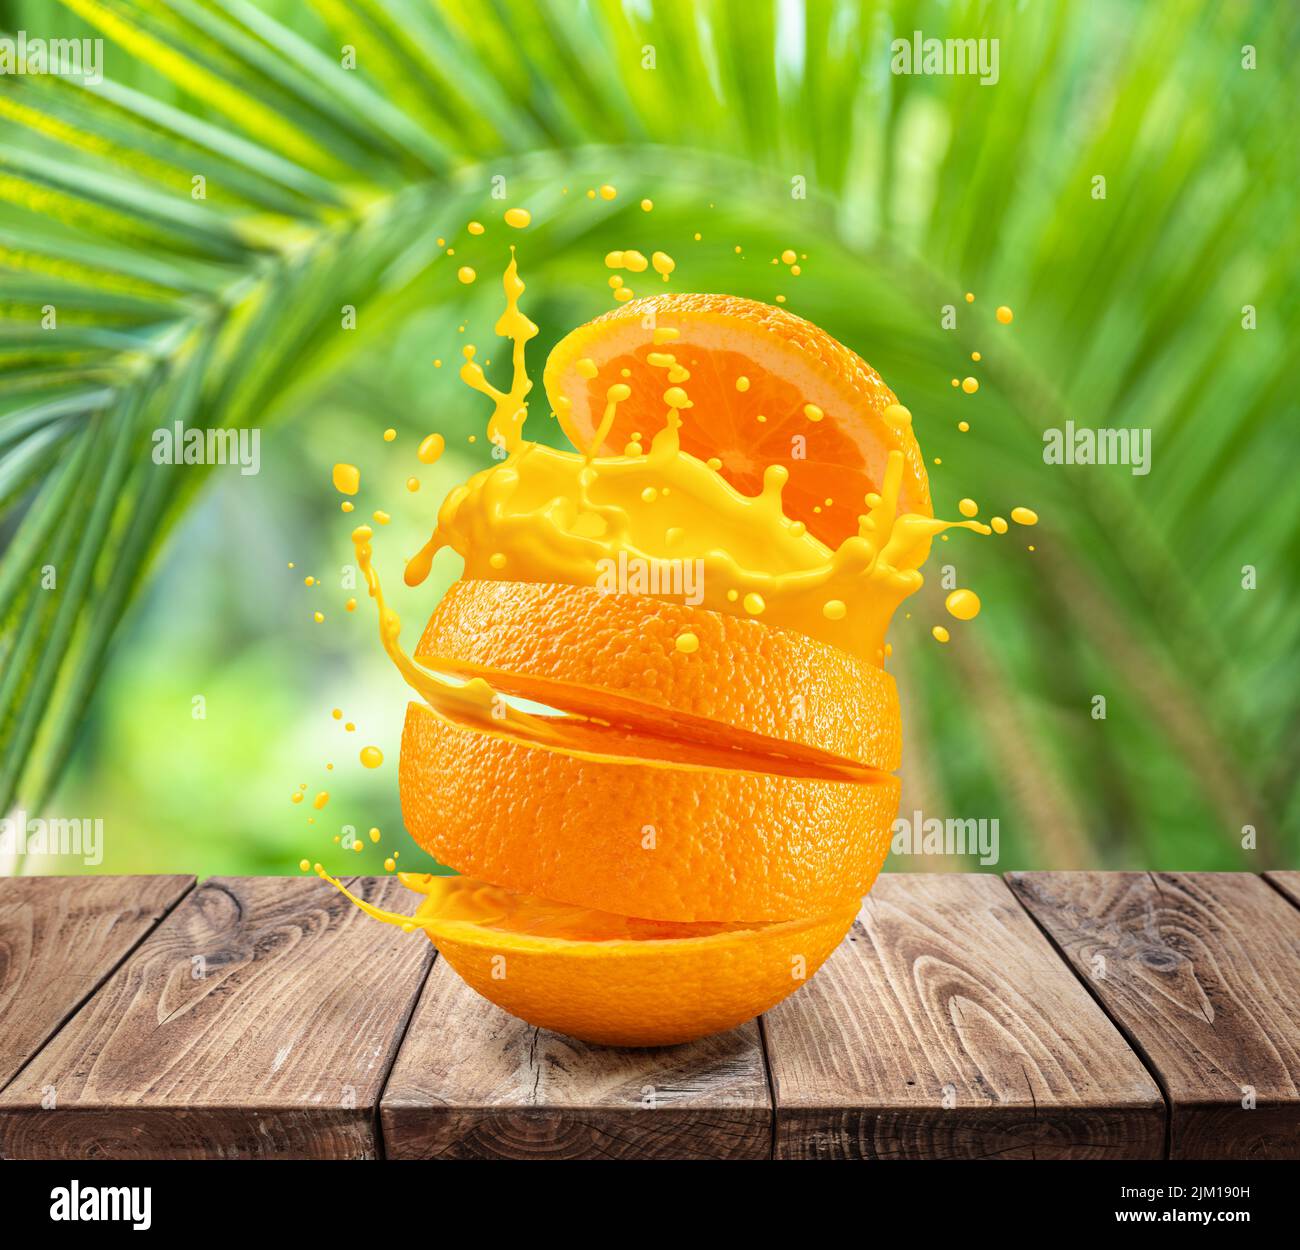 Sliced orange fruit splashing about orange juice on the wooden table. Green palm leaves at the background. Stock Photo